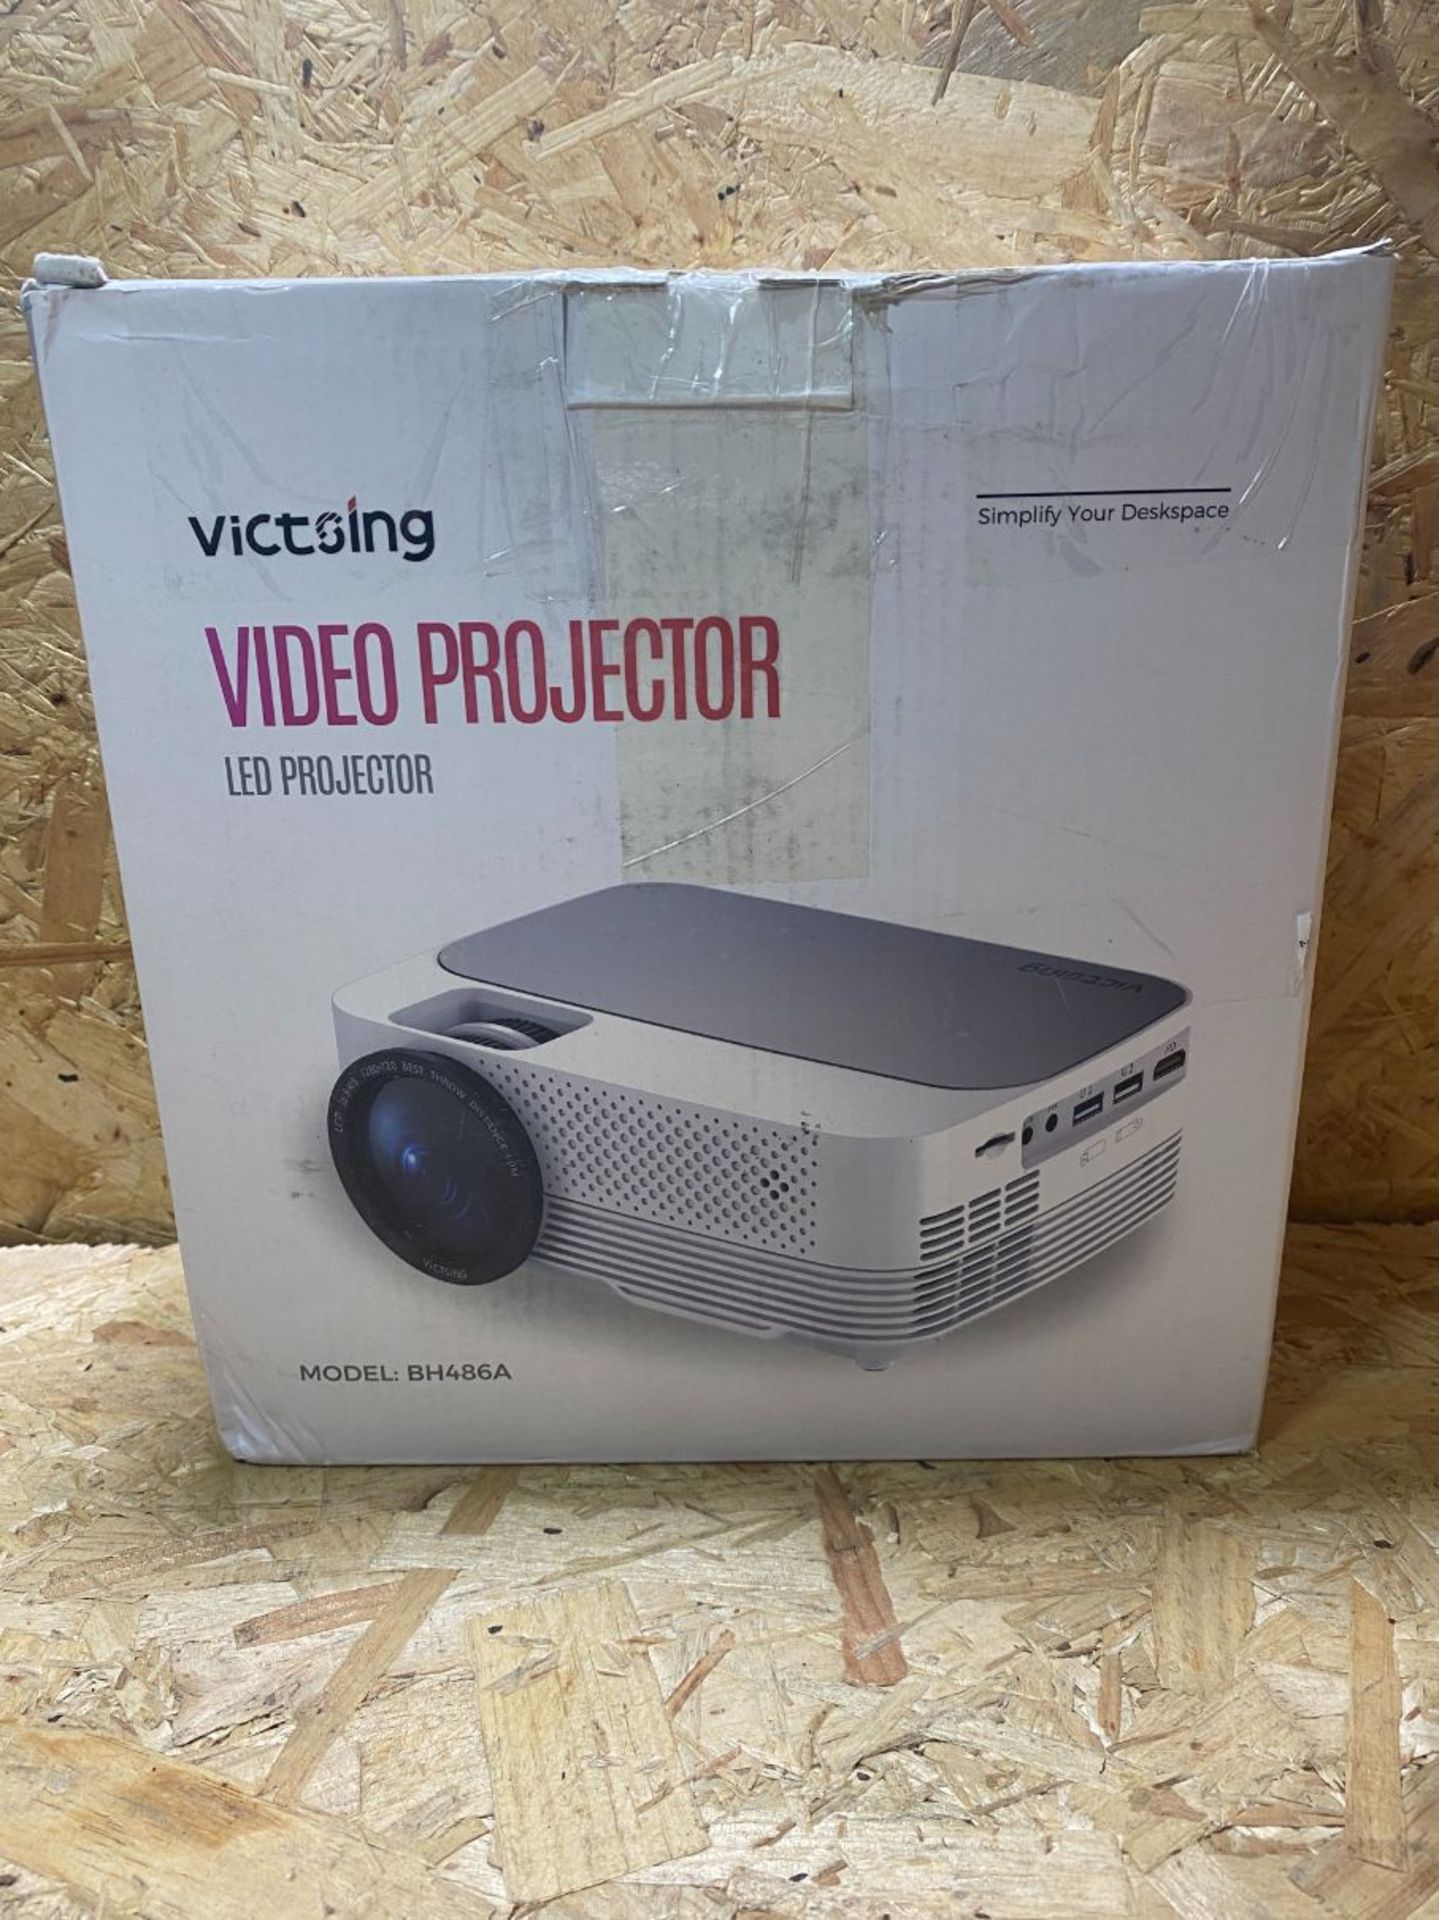 1 X VICTSING LED VIDEO PROJECTOR / RRP £57.99